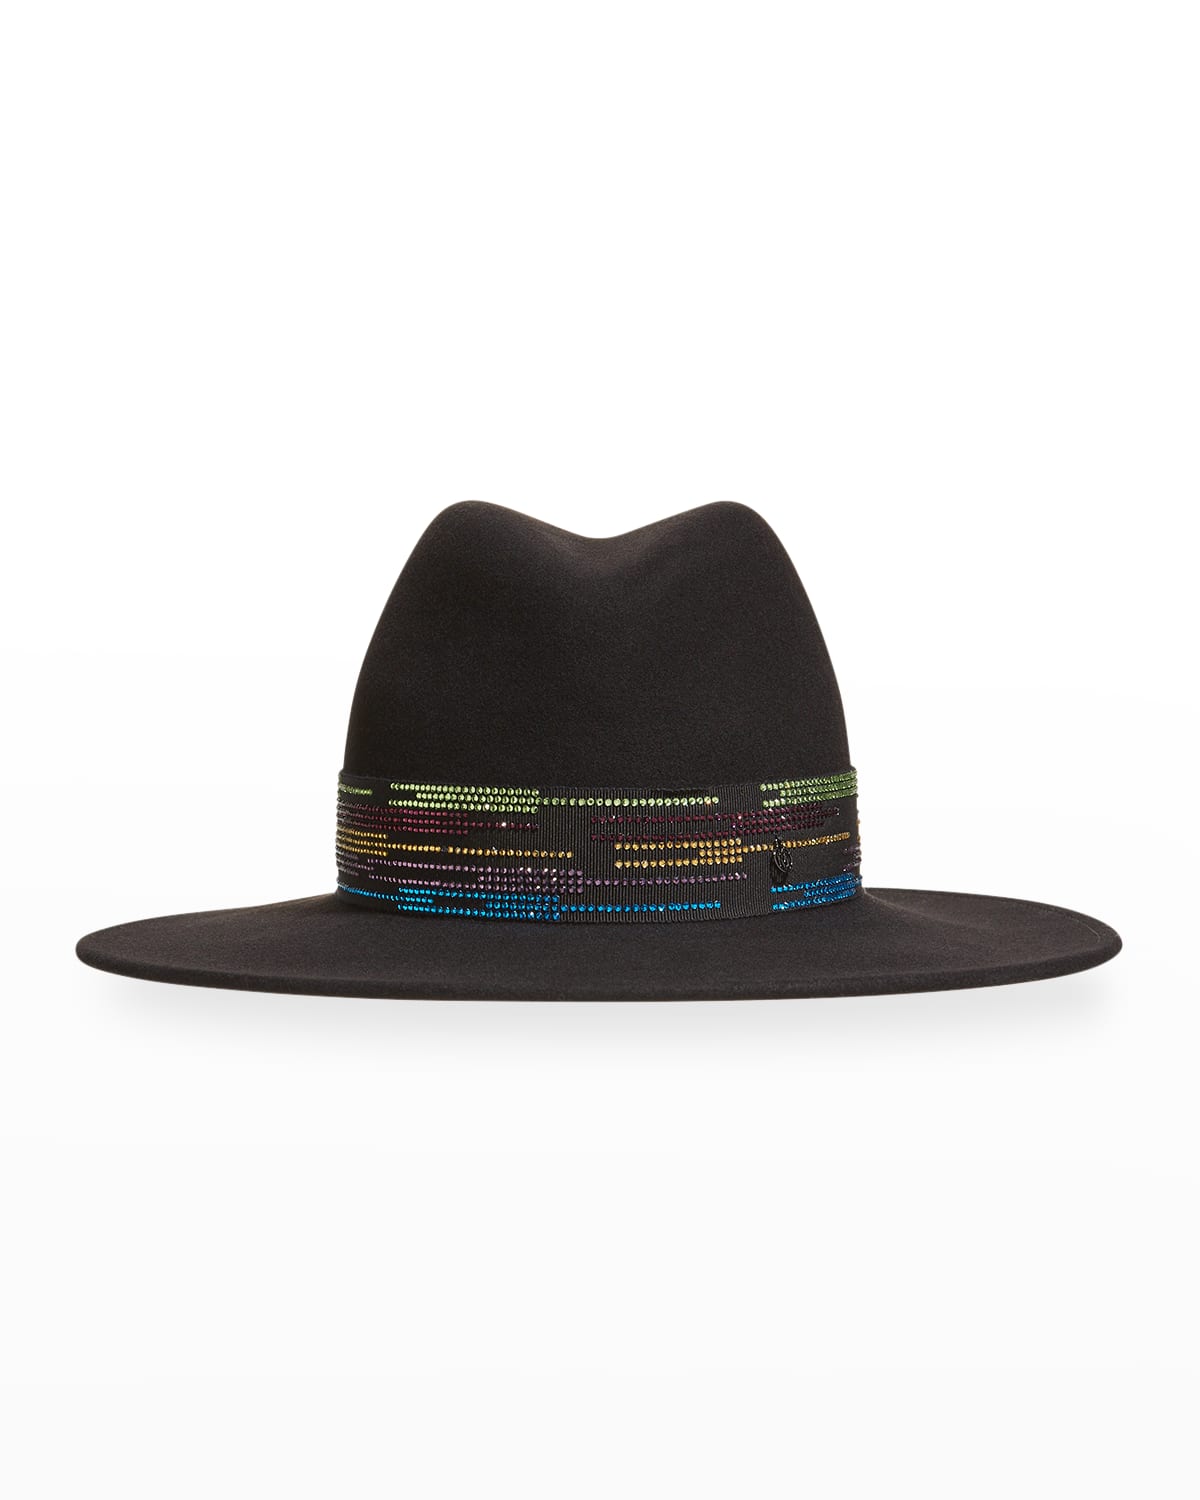 Maison Michel Zango Multicolor Strass Felt Fedora Hat